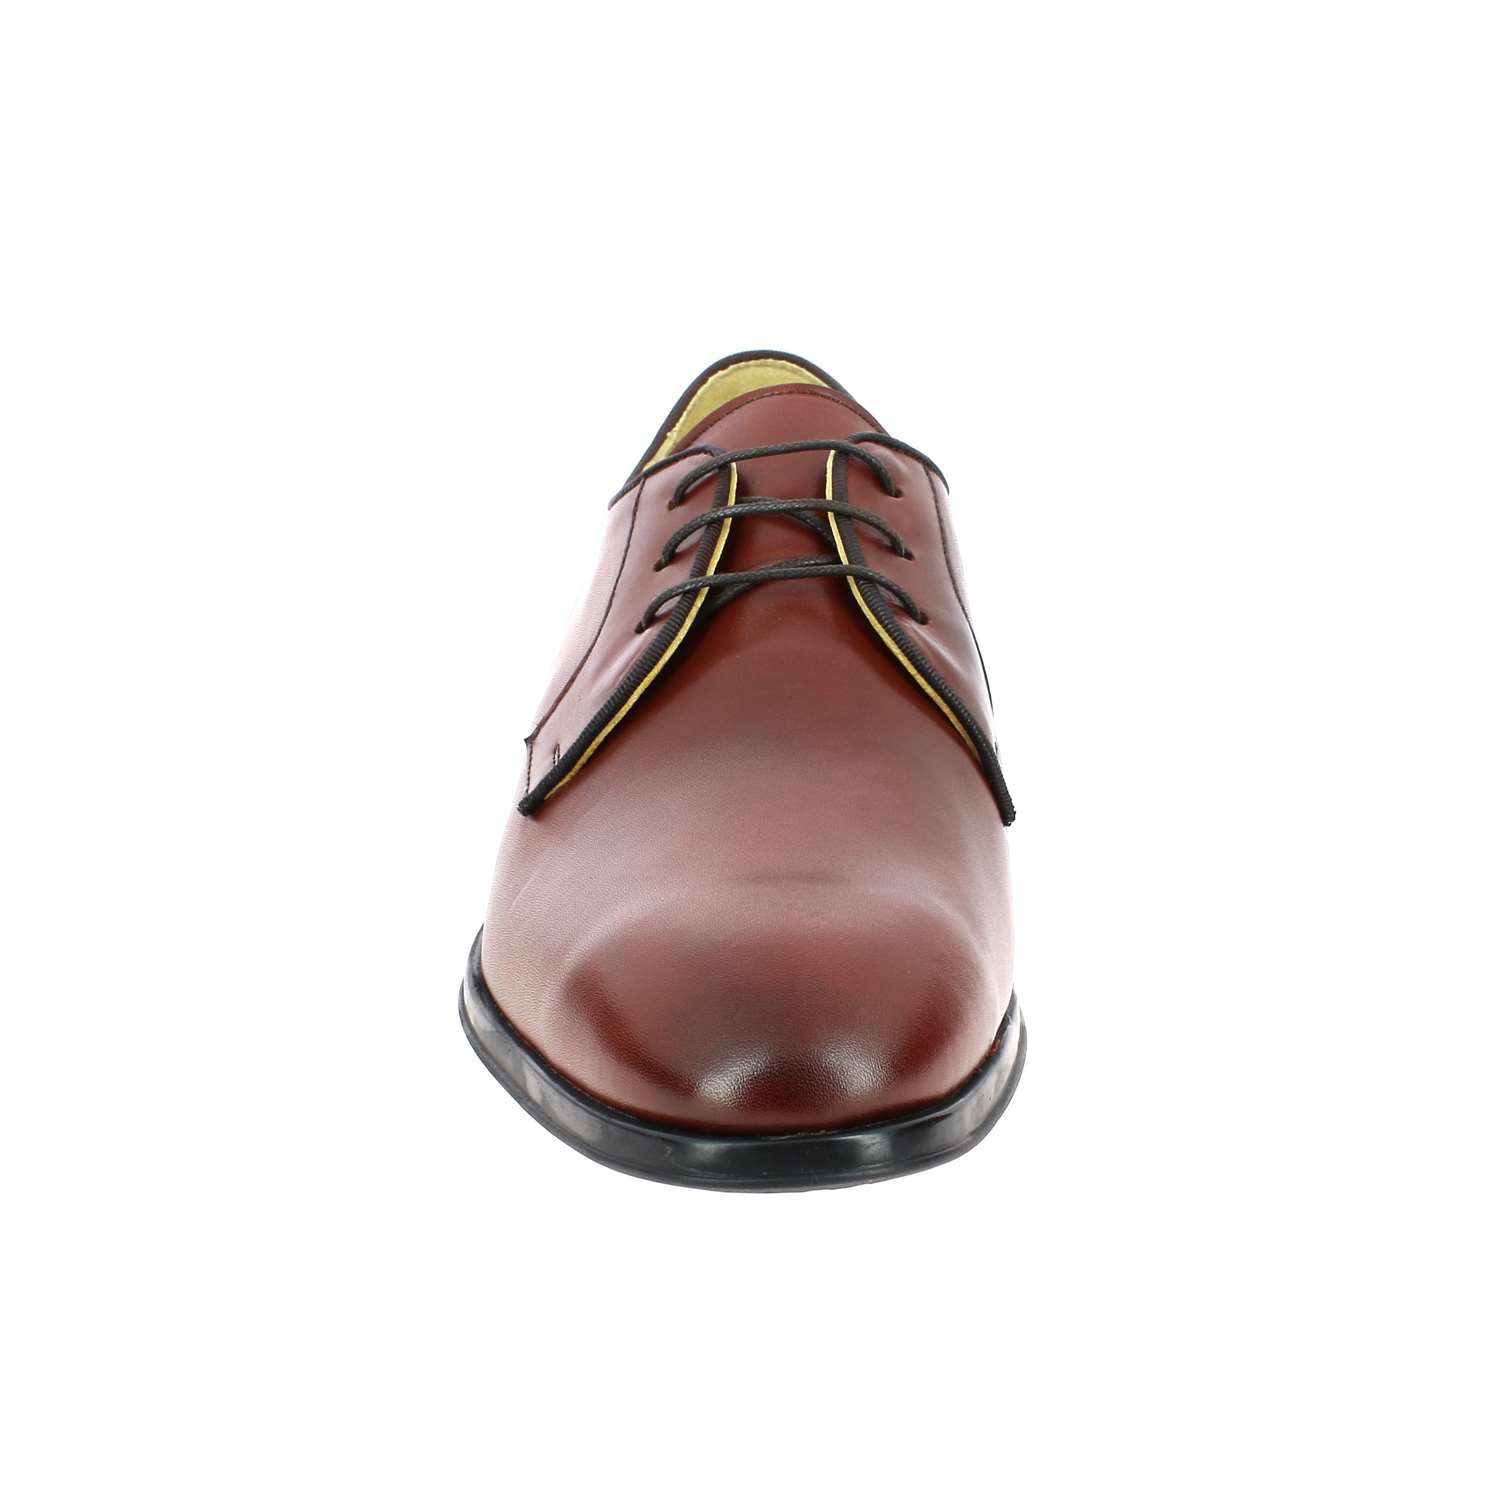 03 - FAROLOW - ATELIER CHABANAIS - Chaussures à lacets - Cuir